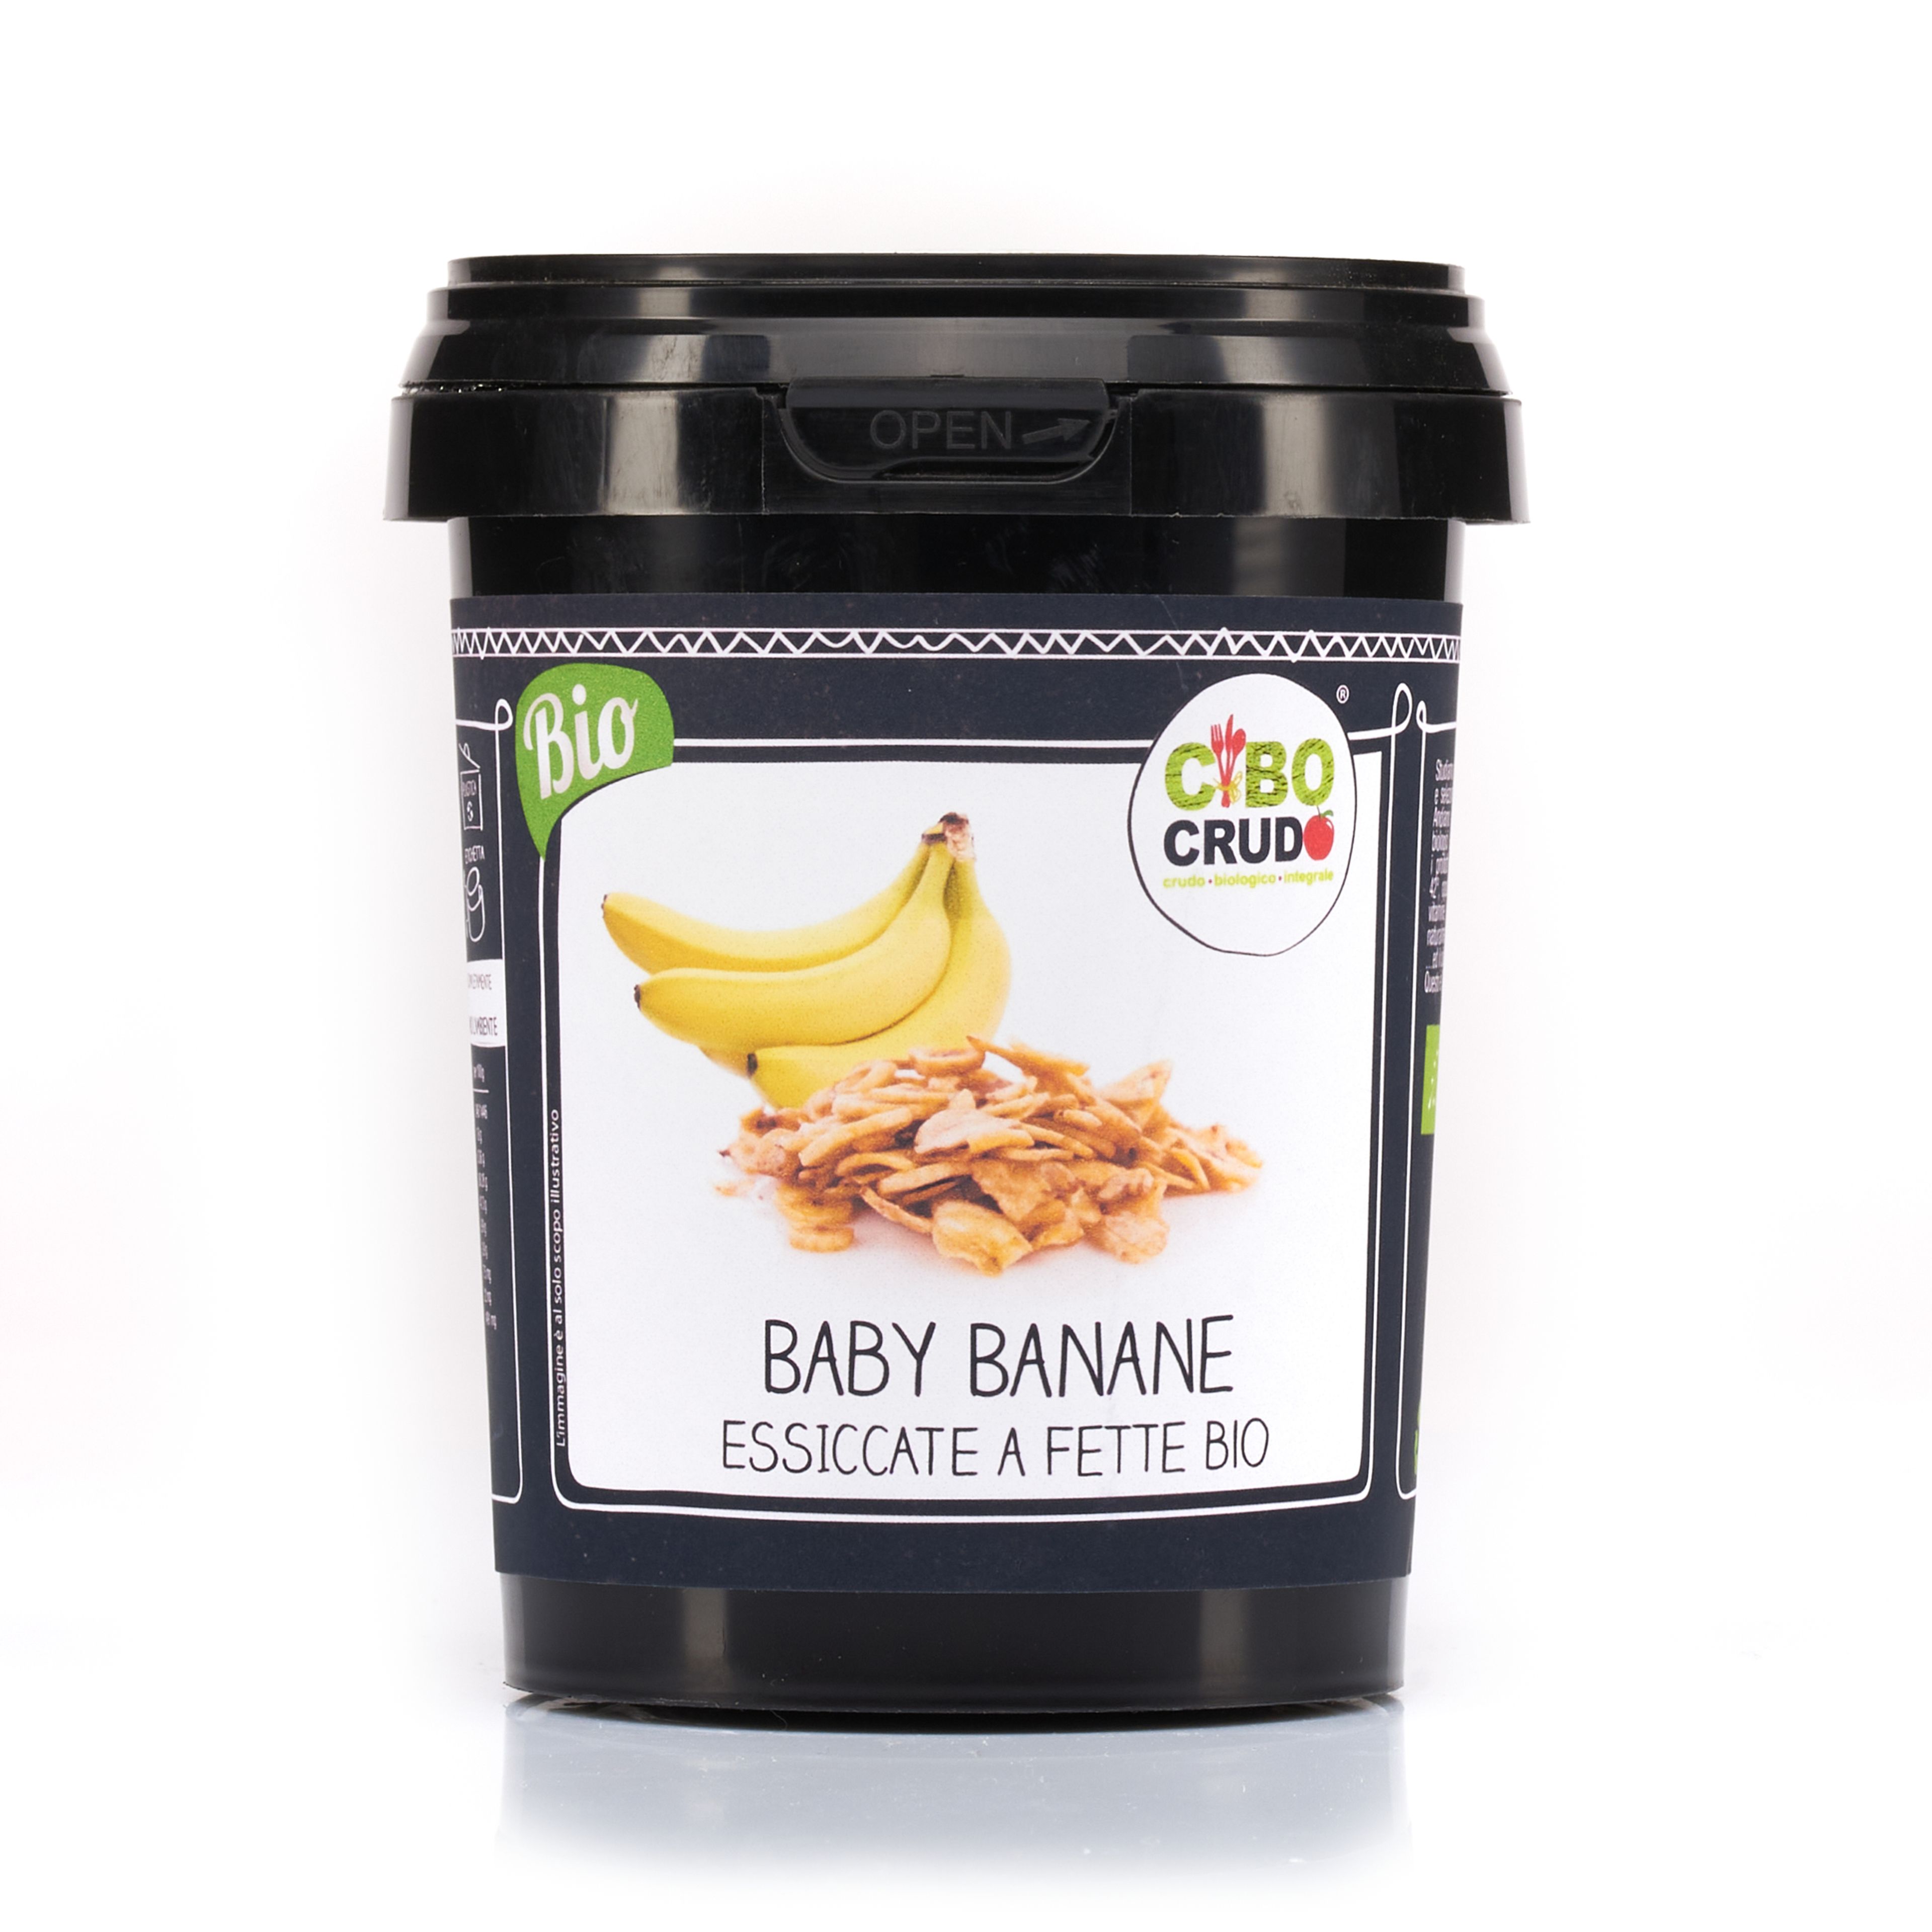 Baby Banane Essiccate Crude A Fette 1